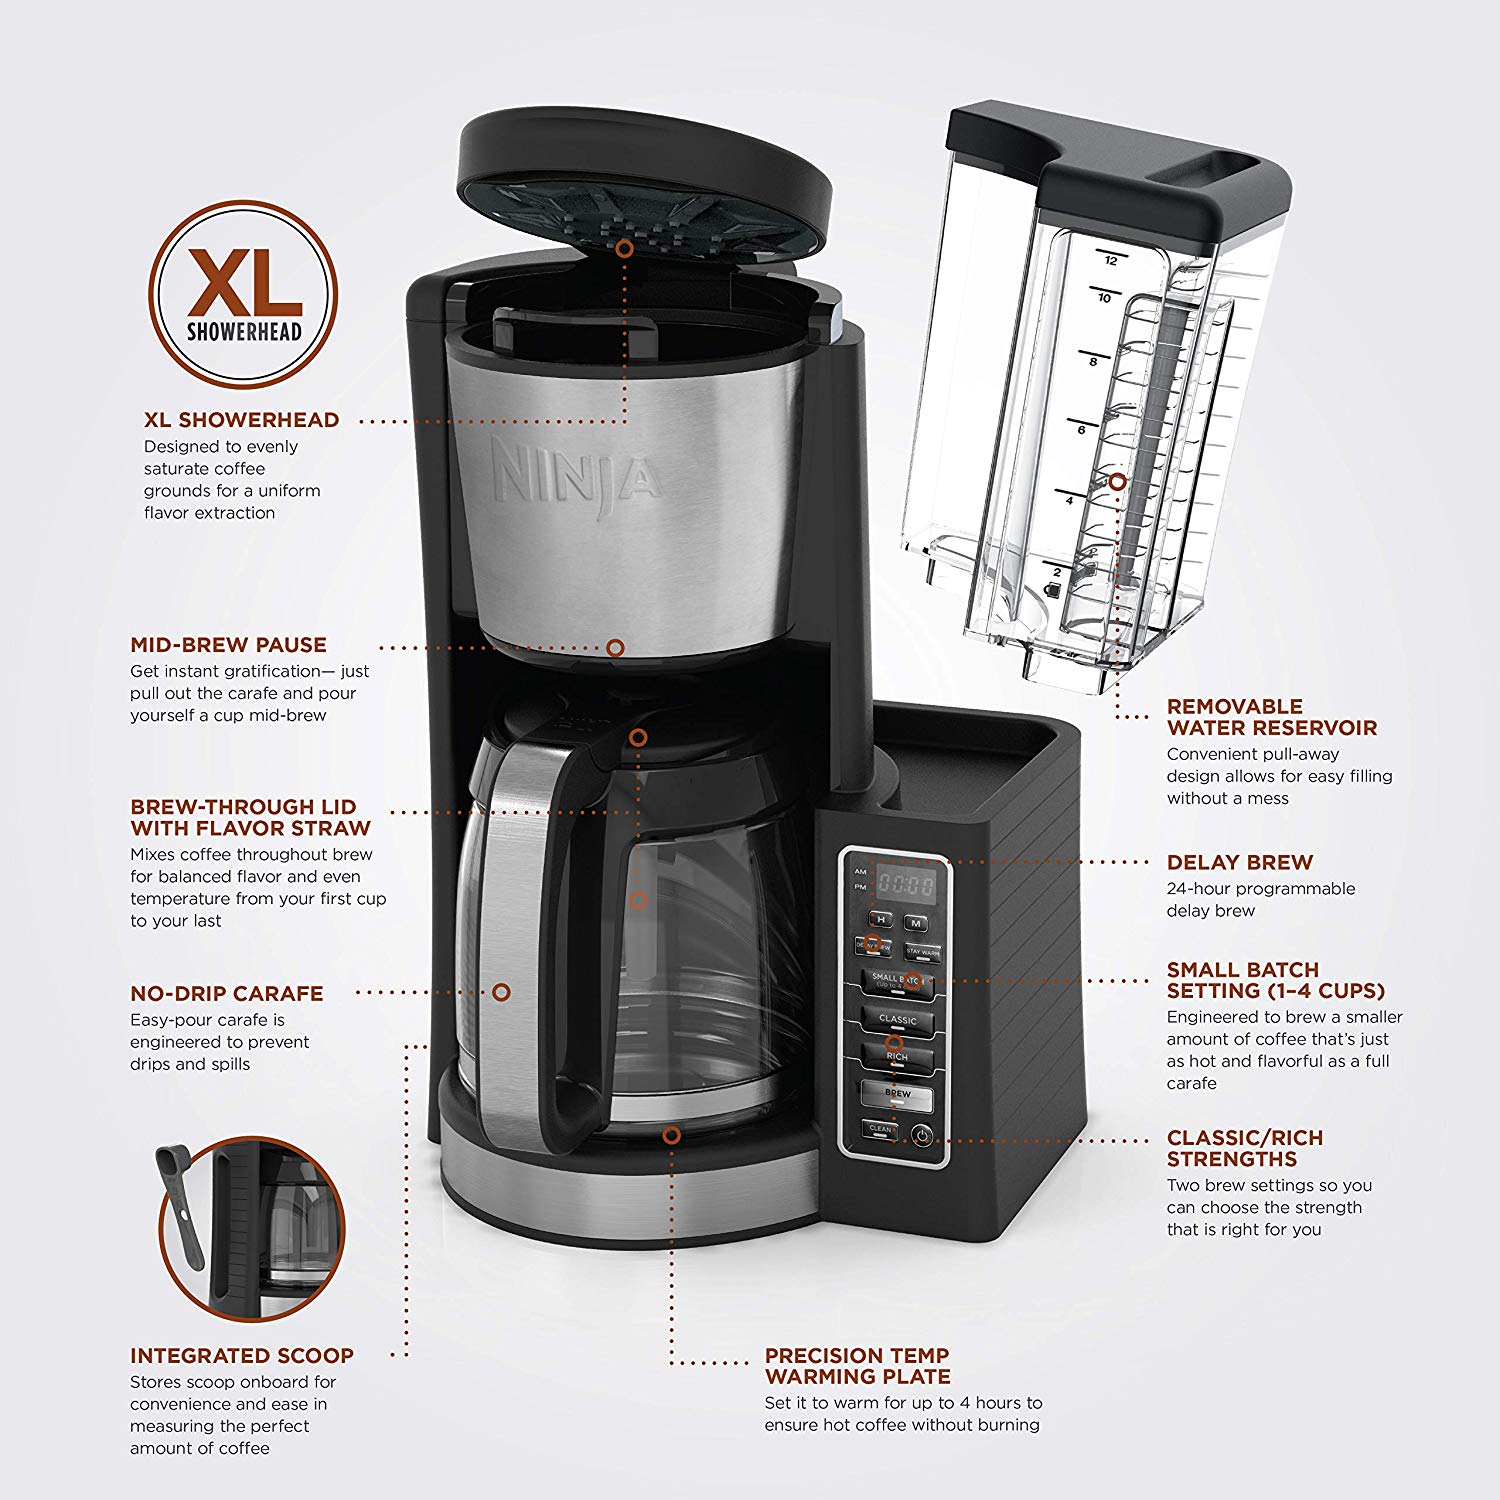 Ninja 12 Cup Programmable Coffee Maker review